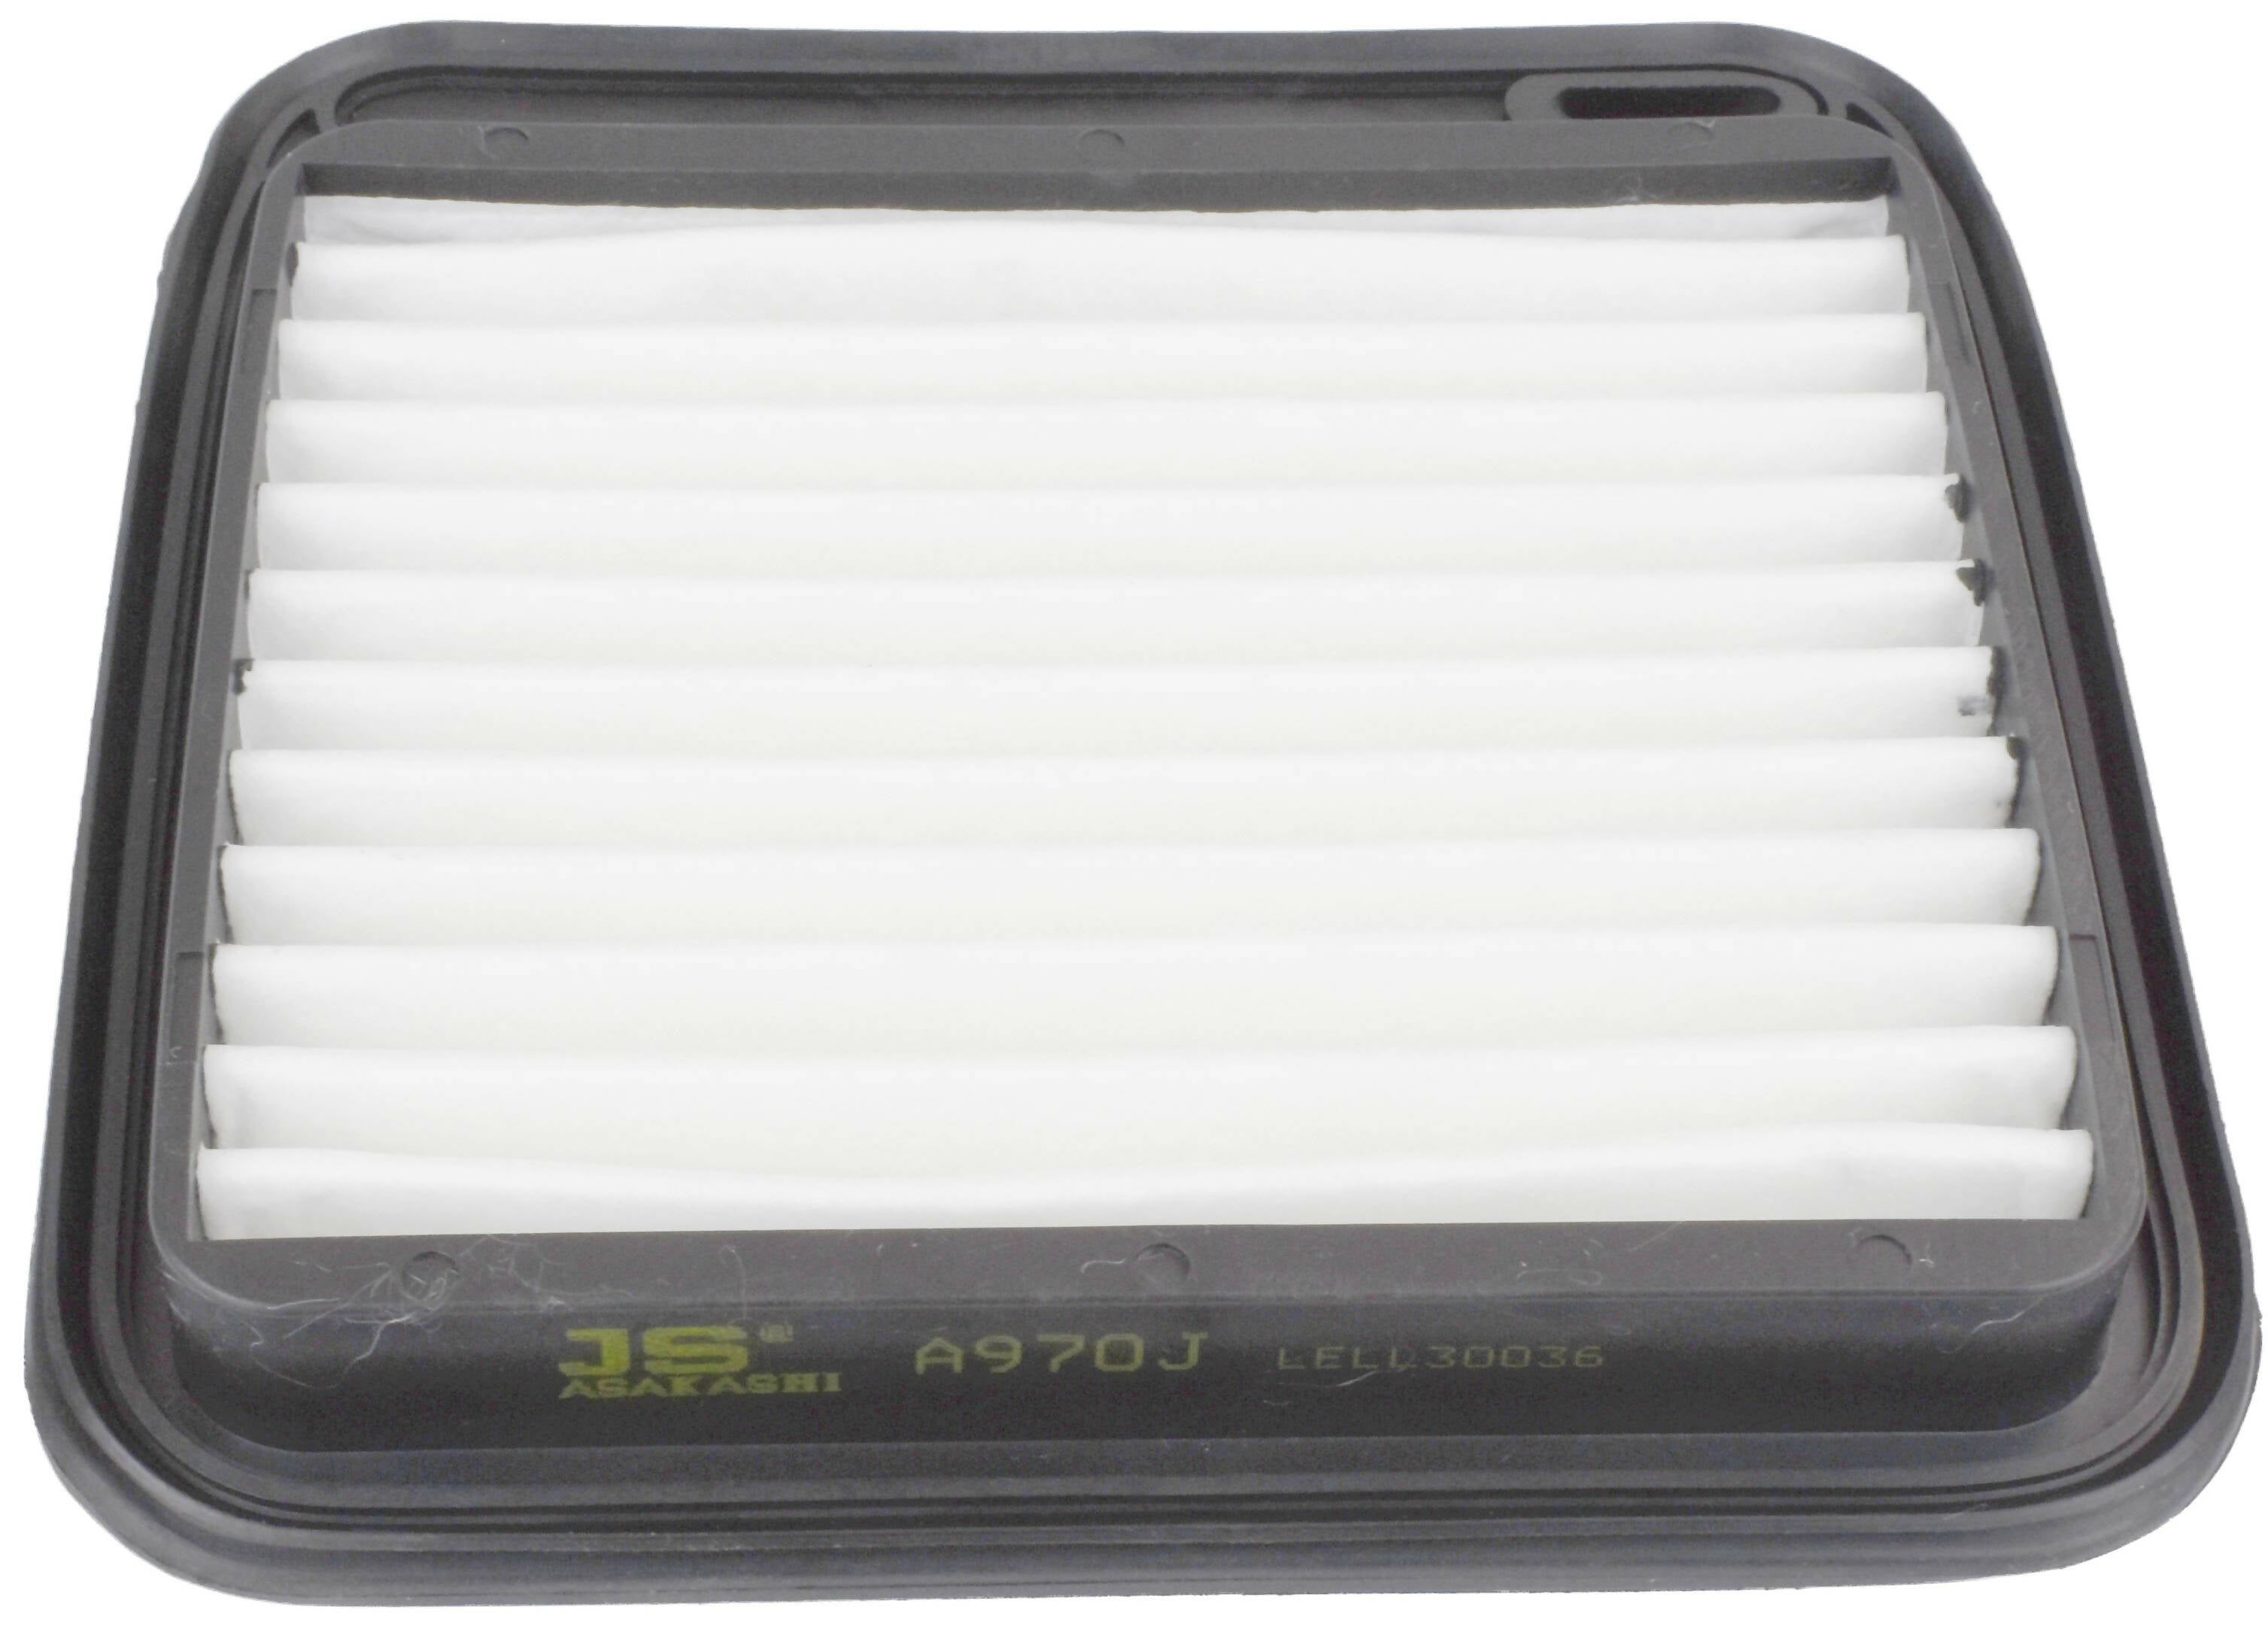 Air Filter, JS, 13780-58J50, A970J (002811)